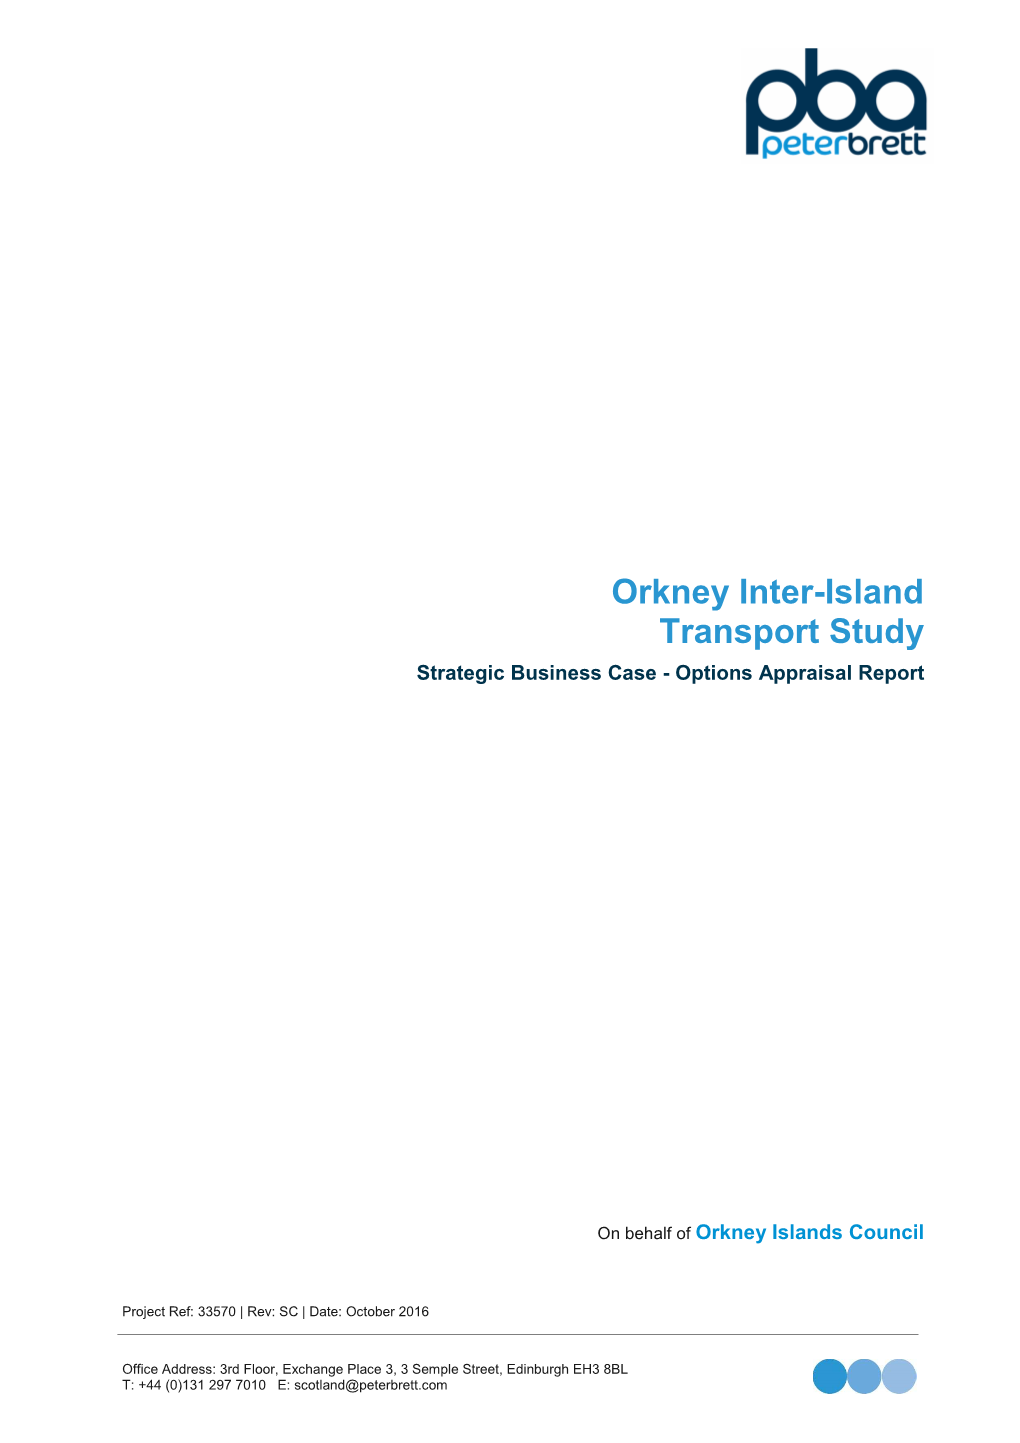 20161012 OIITS Options Appraisal Report SBC Part 2 FINAL